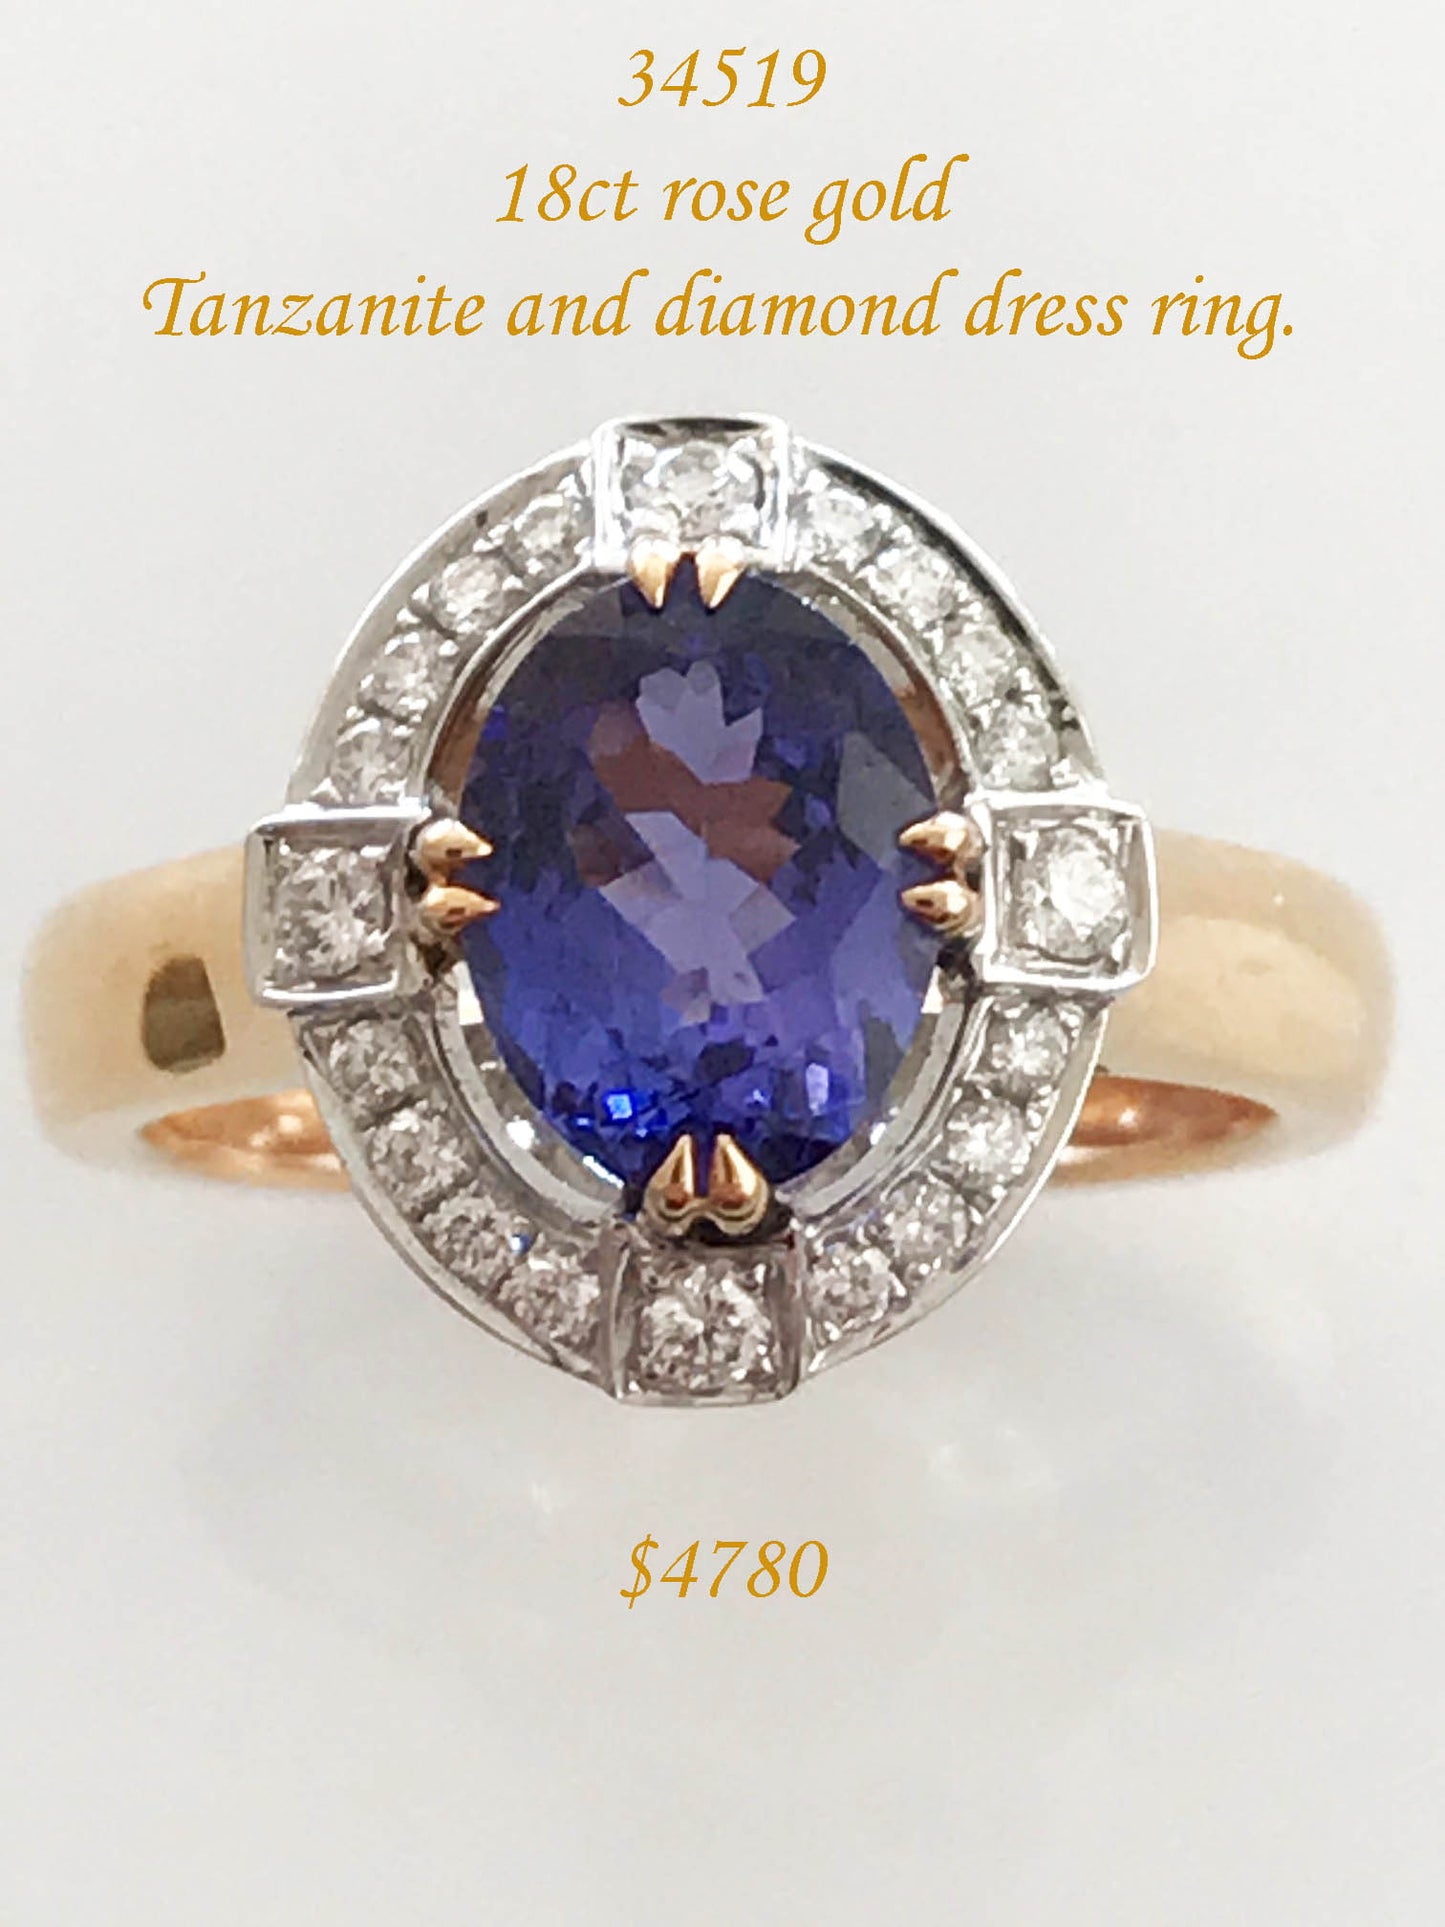 Georgian style Tanzanite and diamond ring in 18ct rose gold.